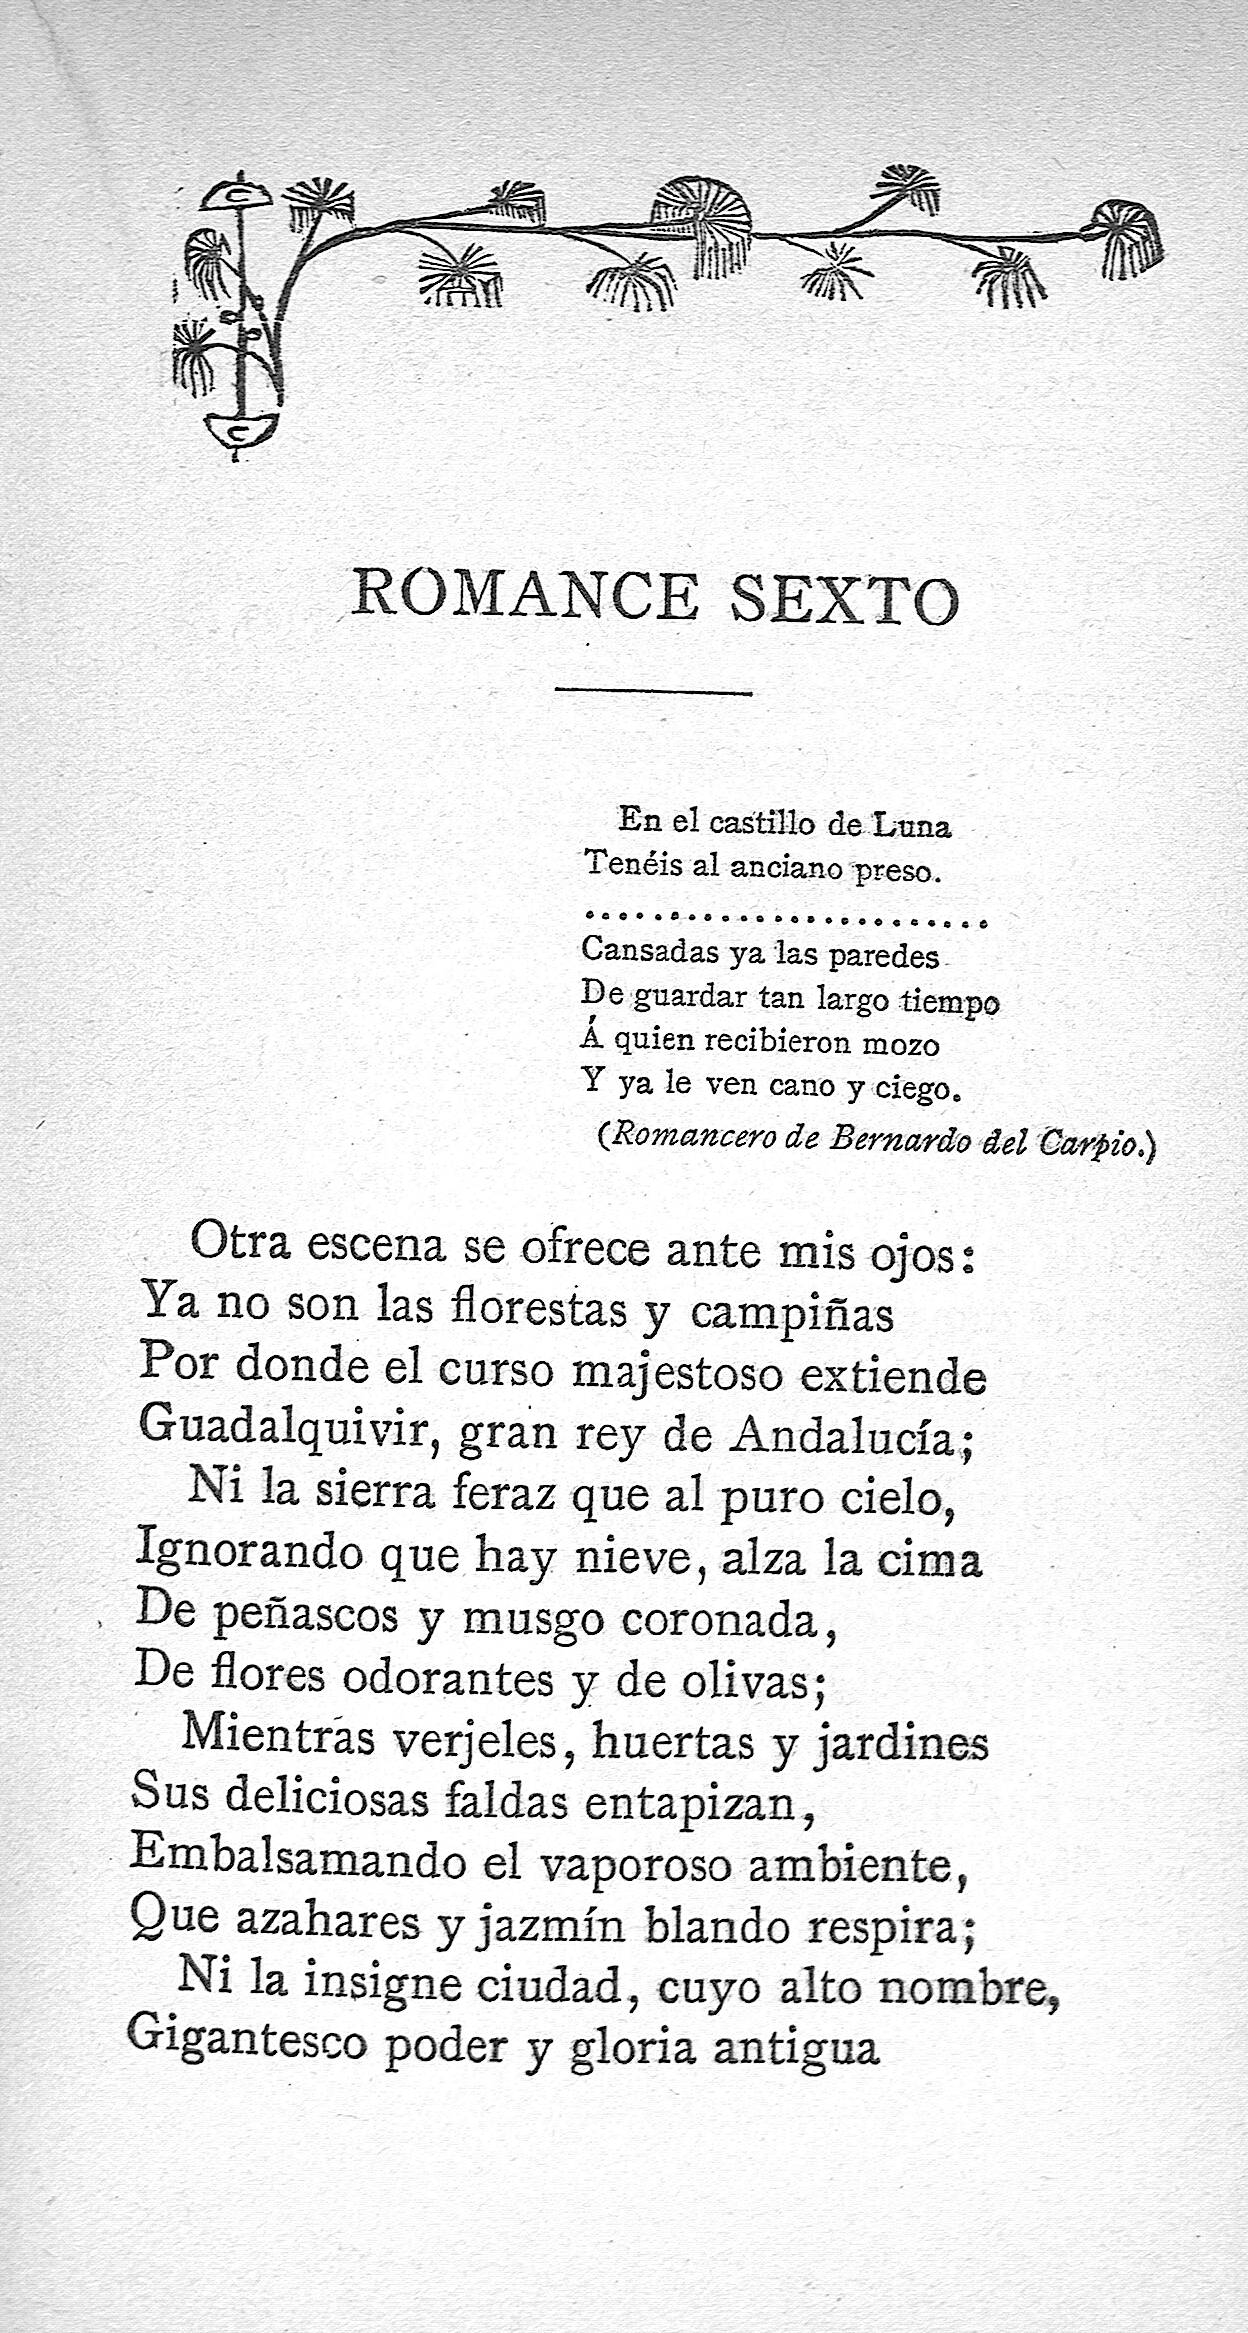 Romance sexto